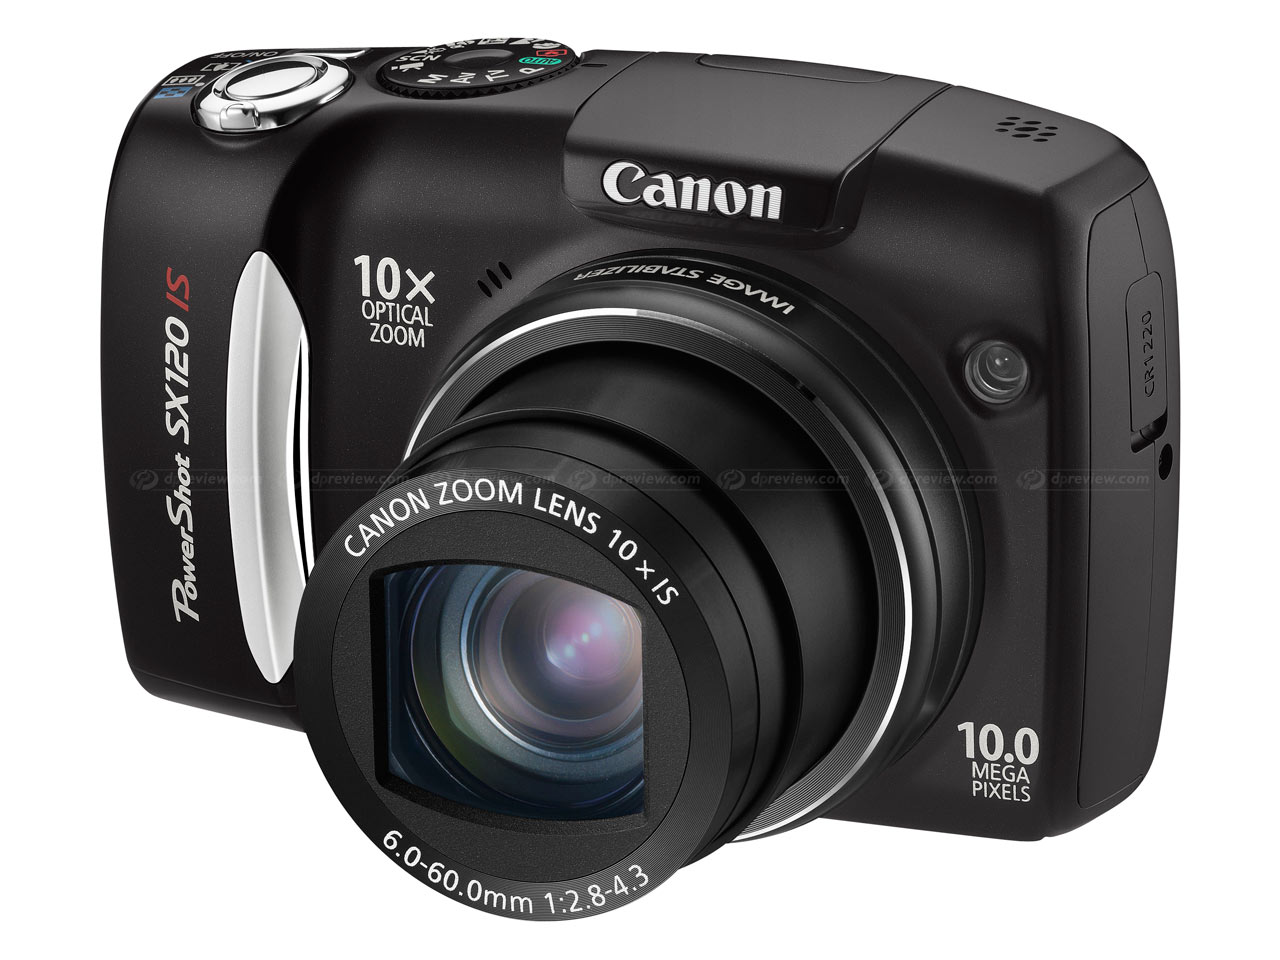 Canon PowerShot SX120 IS super-zoom